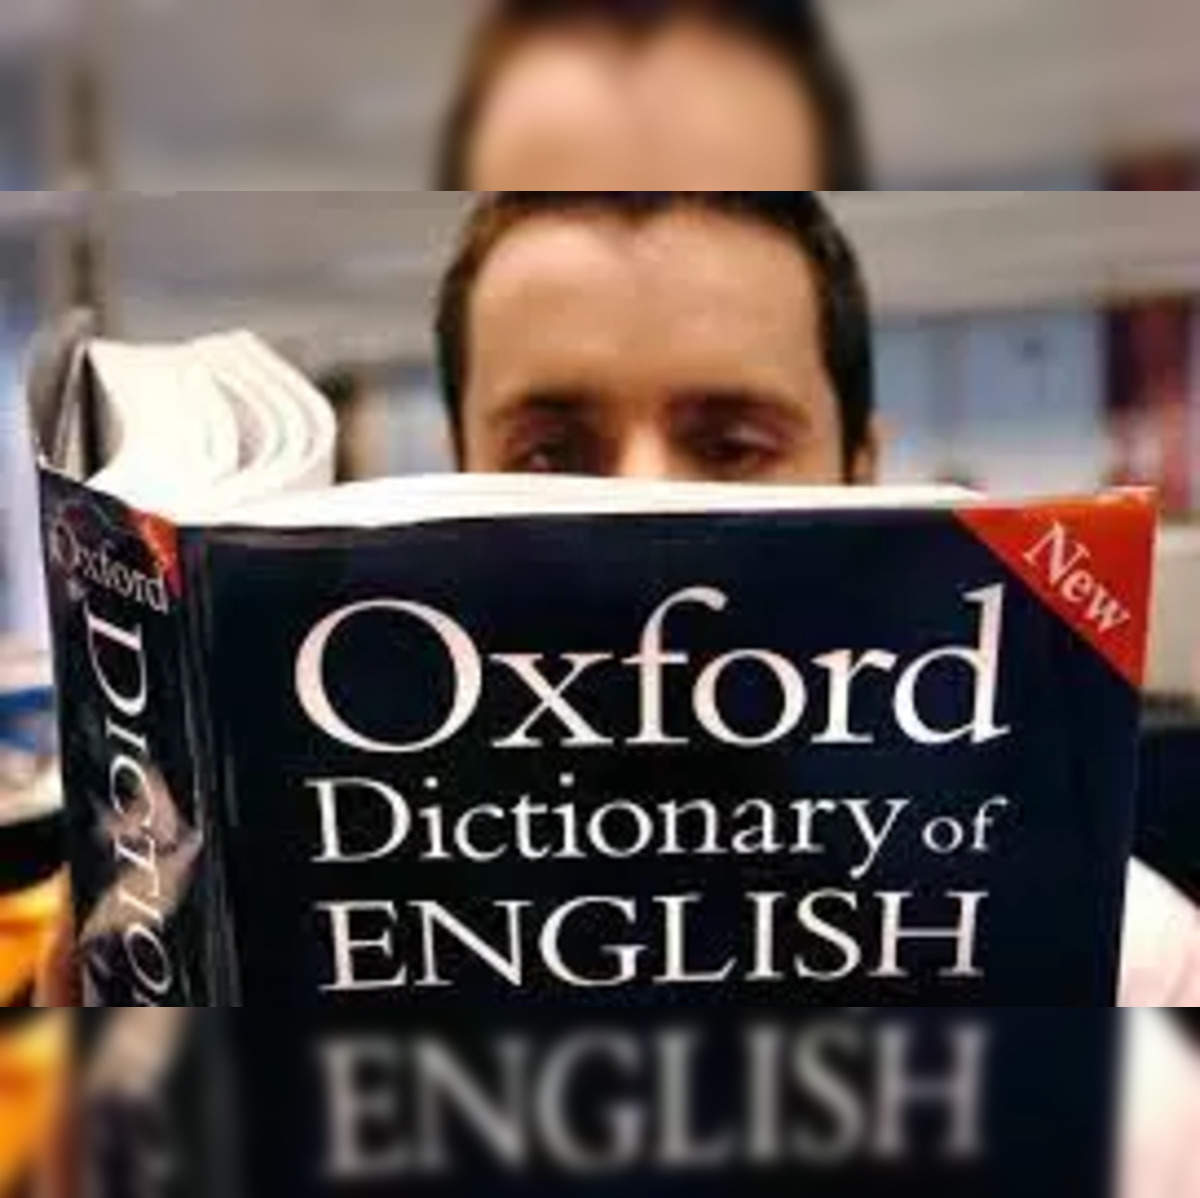 Oxford English-English Malyalam Dictionary